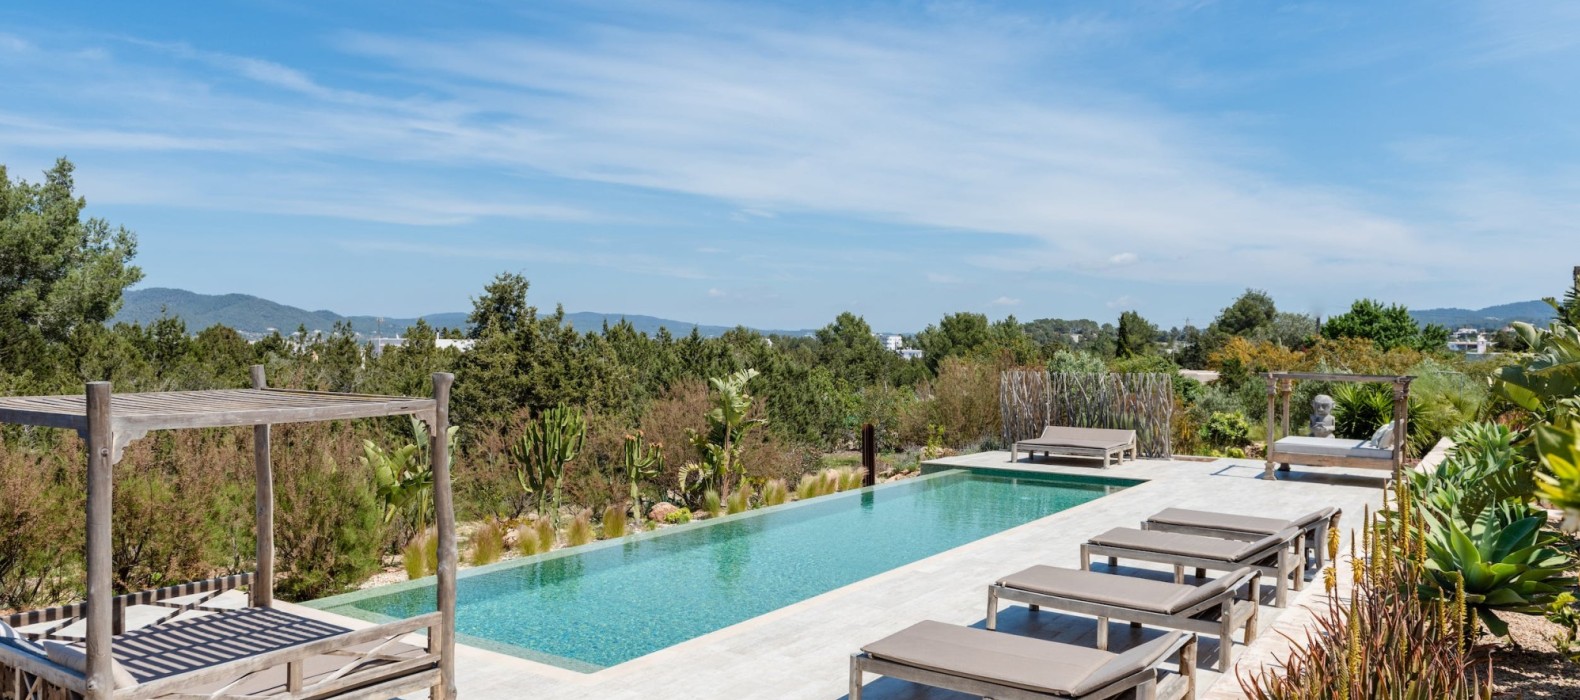 Exterior pool area of Villa Infinity in Ibiza